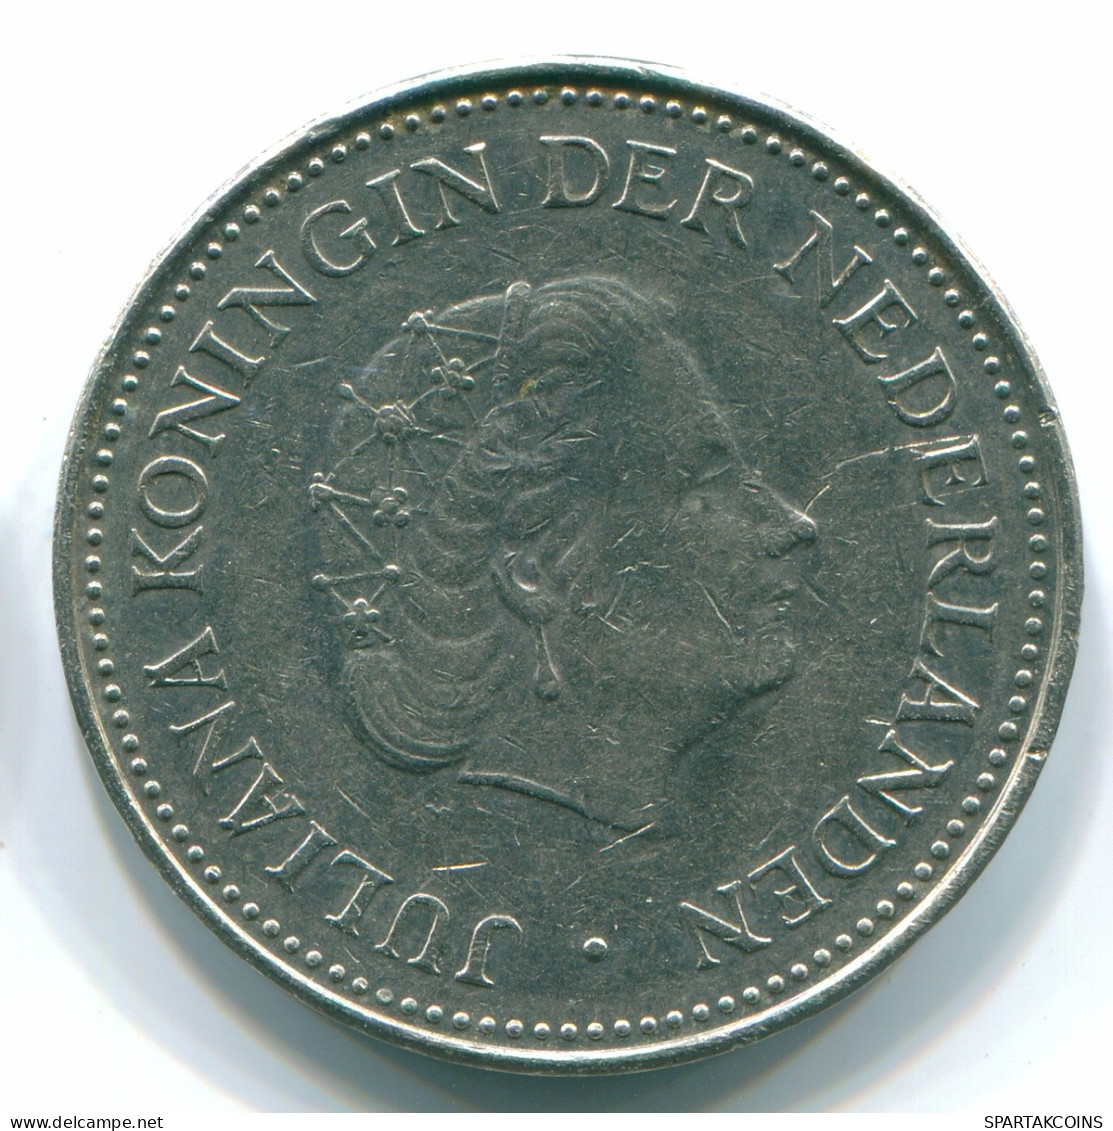 1 GULDEN 1970 NIEDERLÄNDISCHE ANTILLEN Nickel Koloniale Münze #S11899.D.A - Antilles Néerlandaises